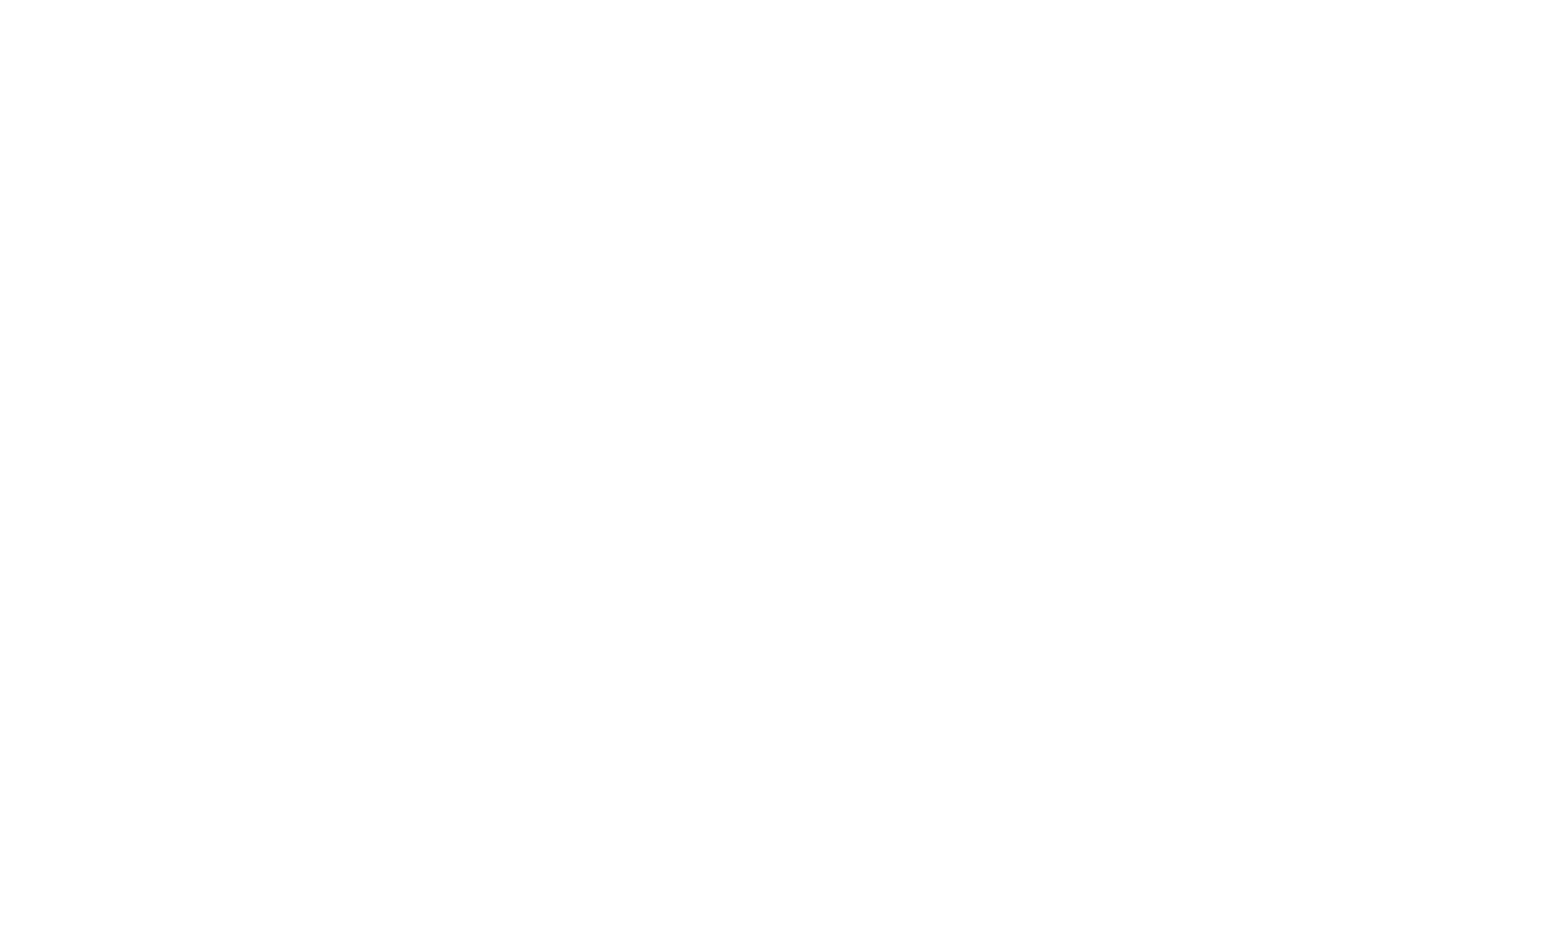 Eisai logo pour fonds sombres (PNG transparent)